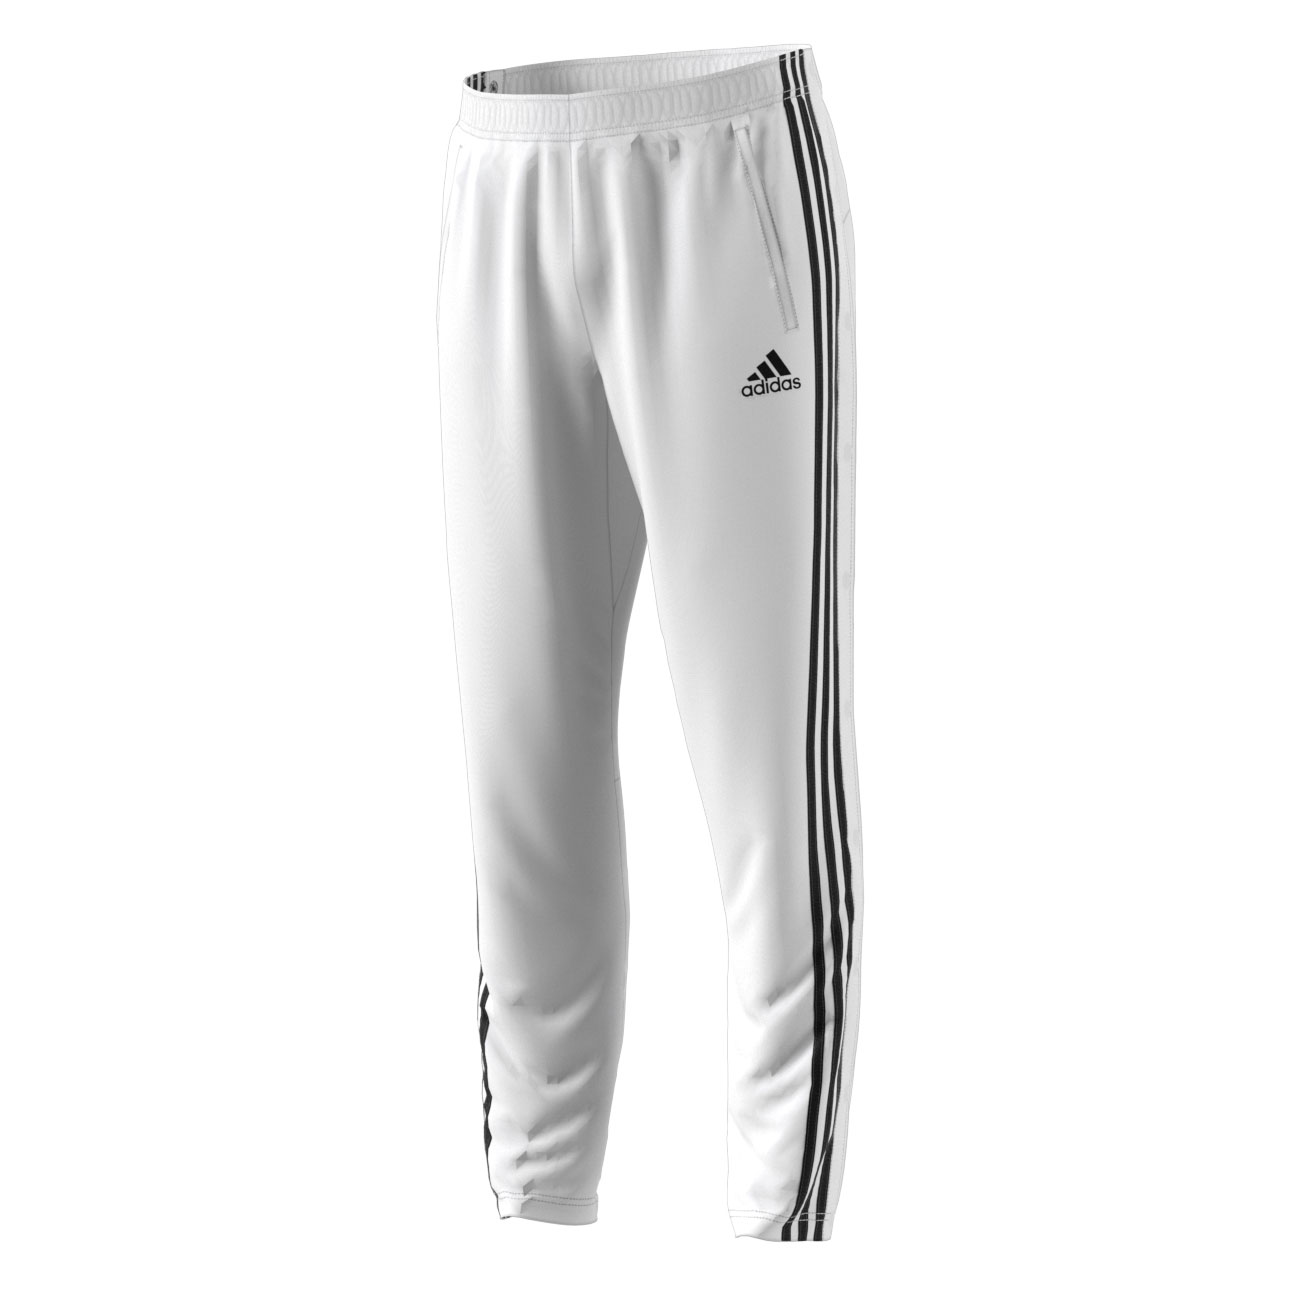 Temporizador Gratificante regalo Adidas Originals ID Men's Track Pant White-Black cf9316 | eBay